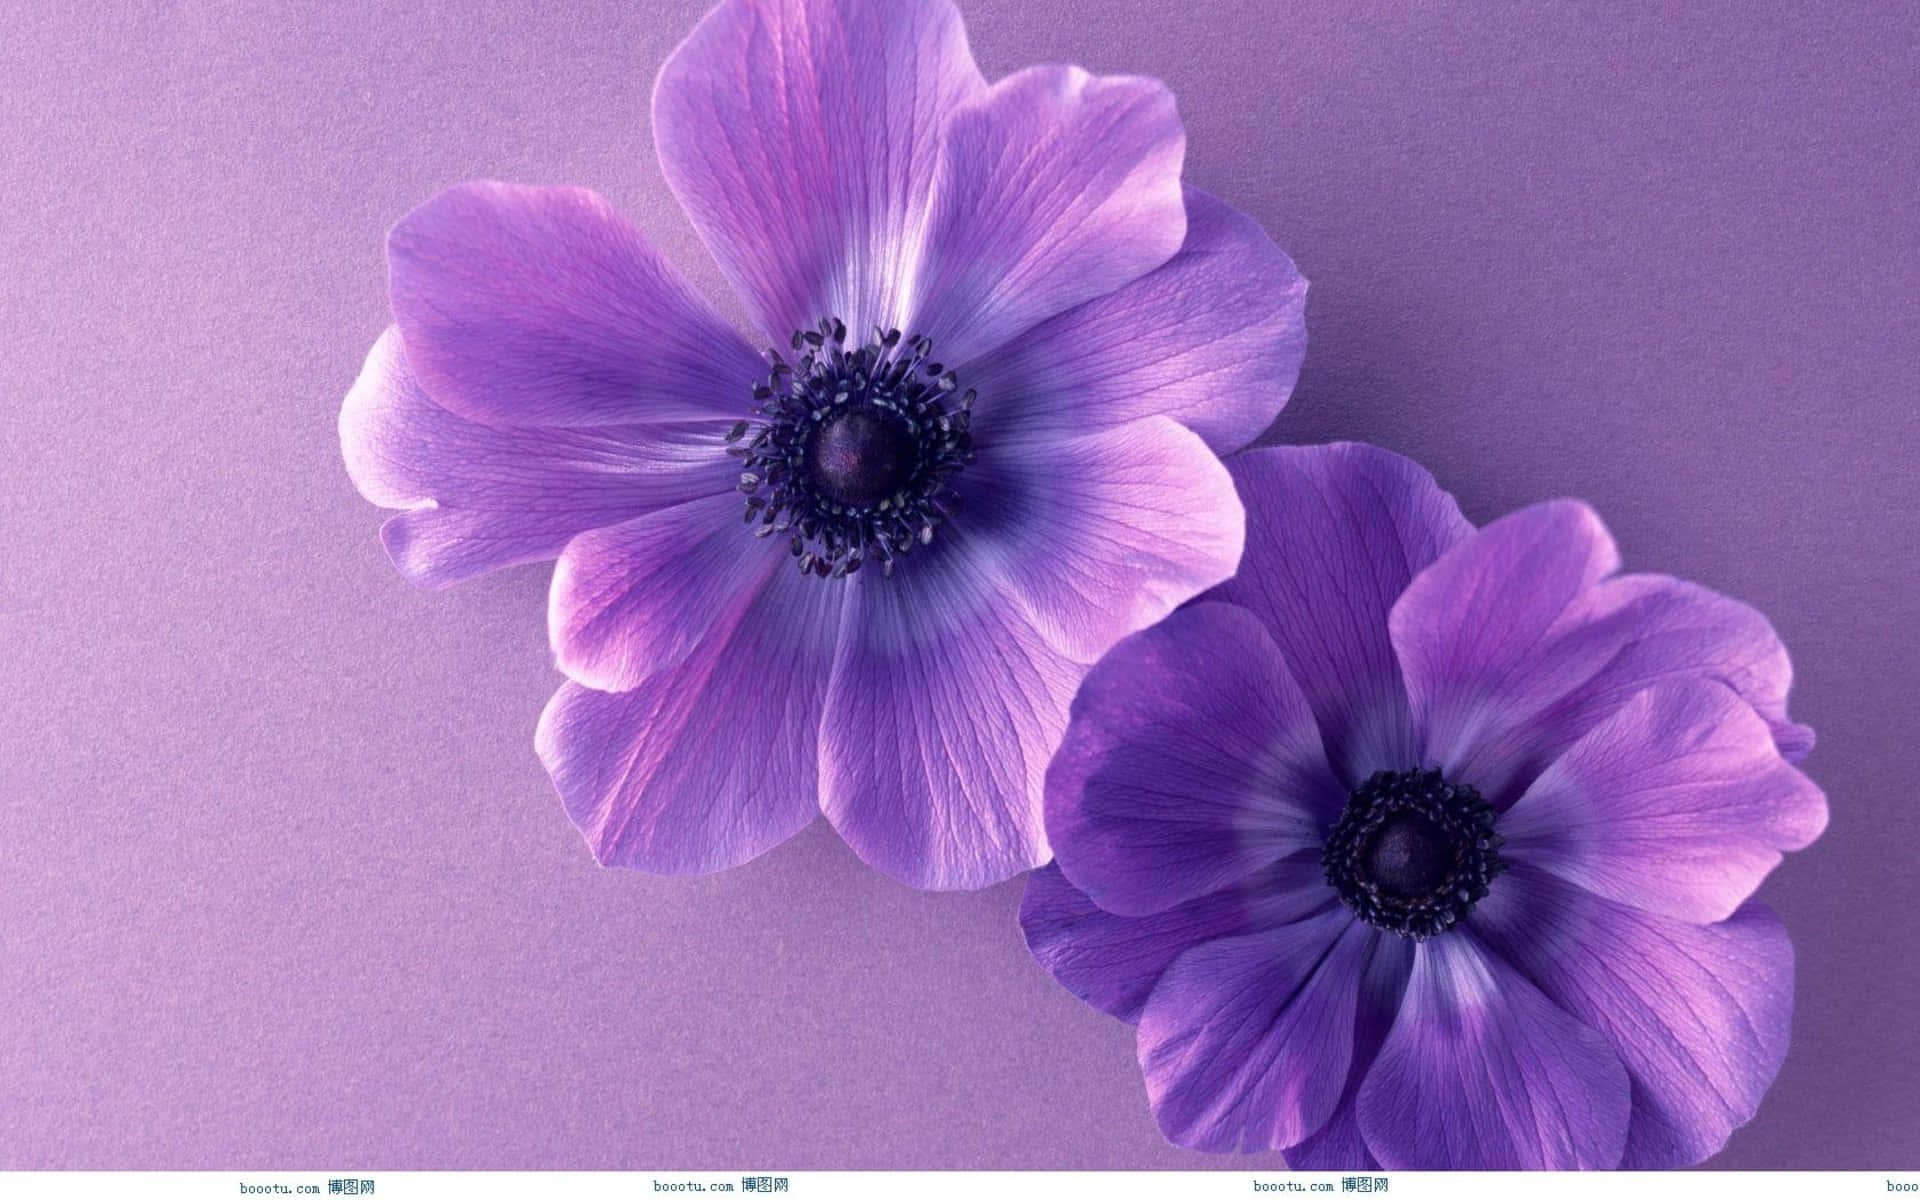 Enjoy the Beauty of Nature - Pretty Flower Wallpaper